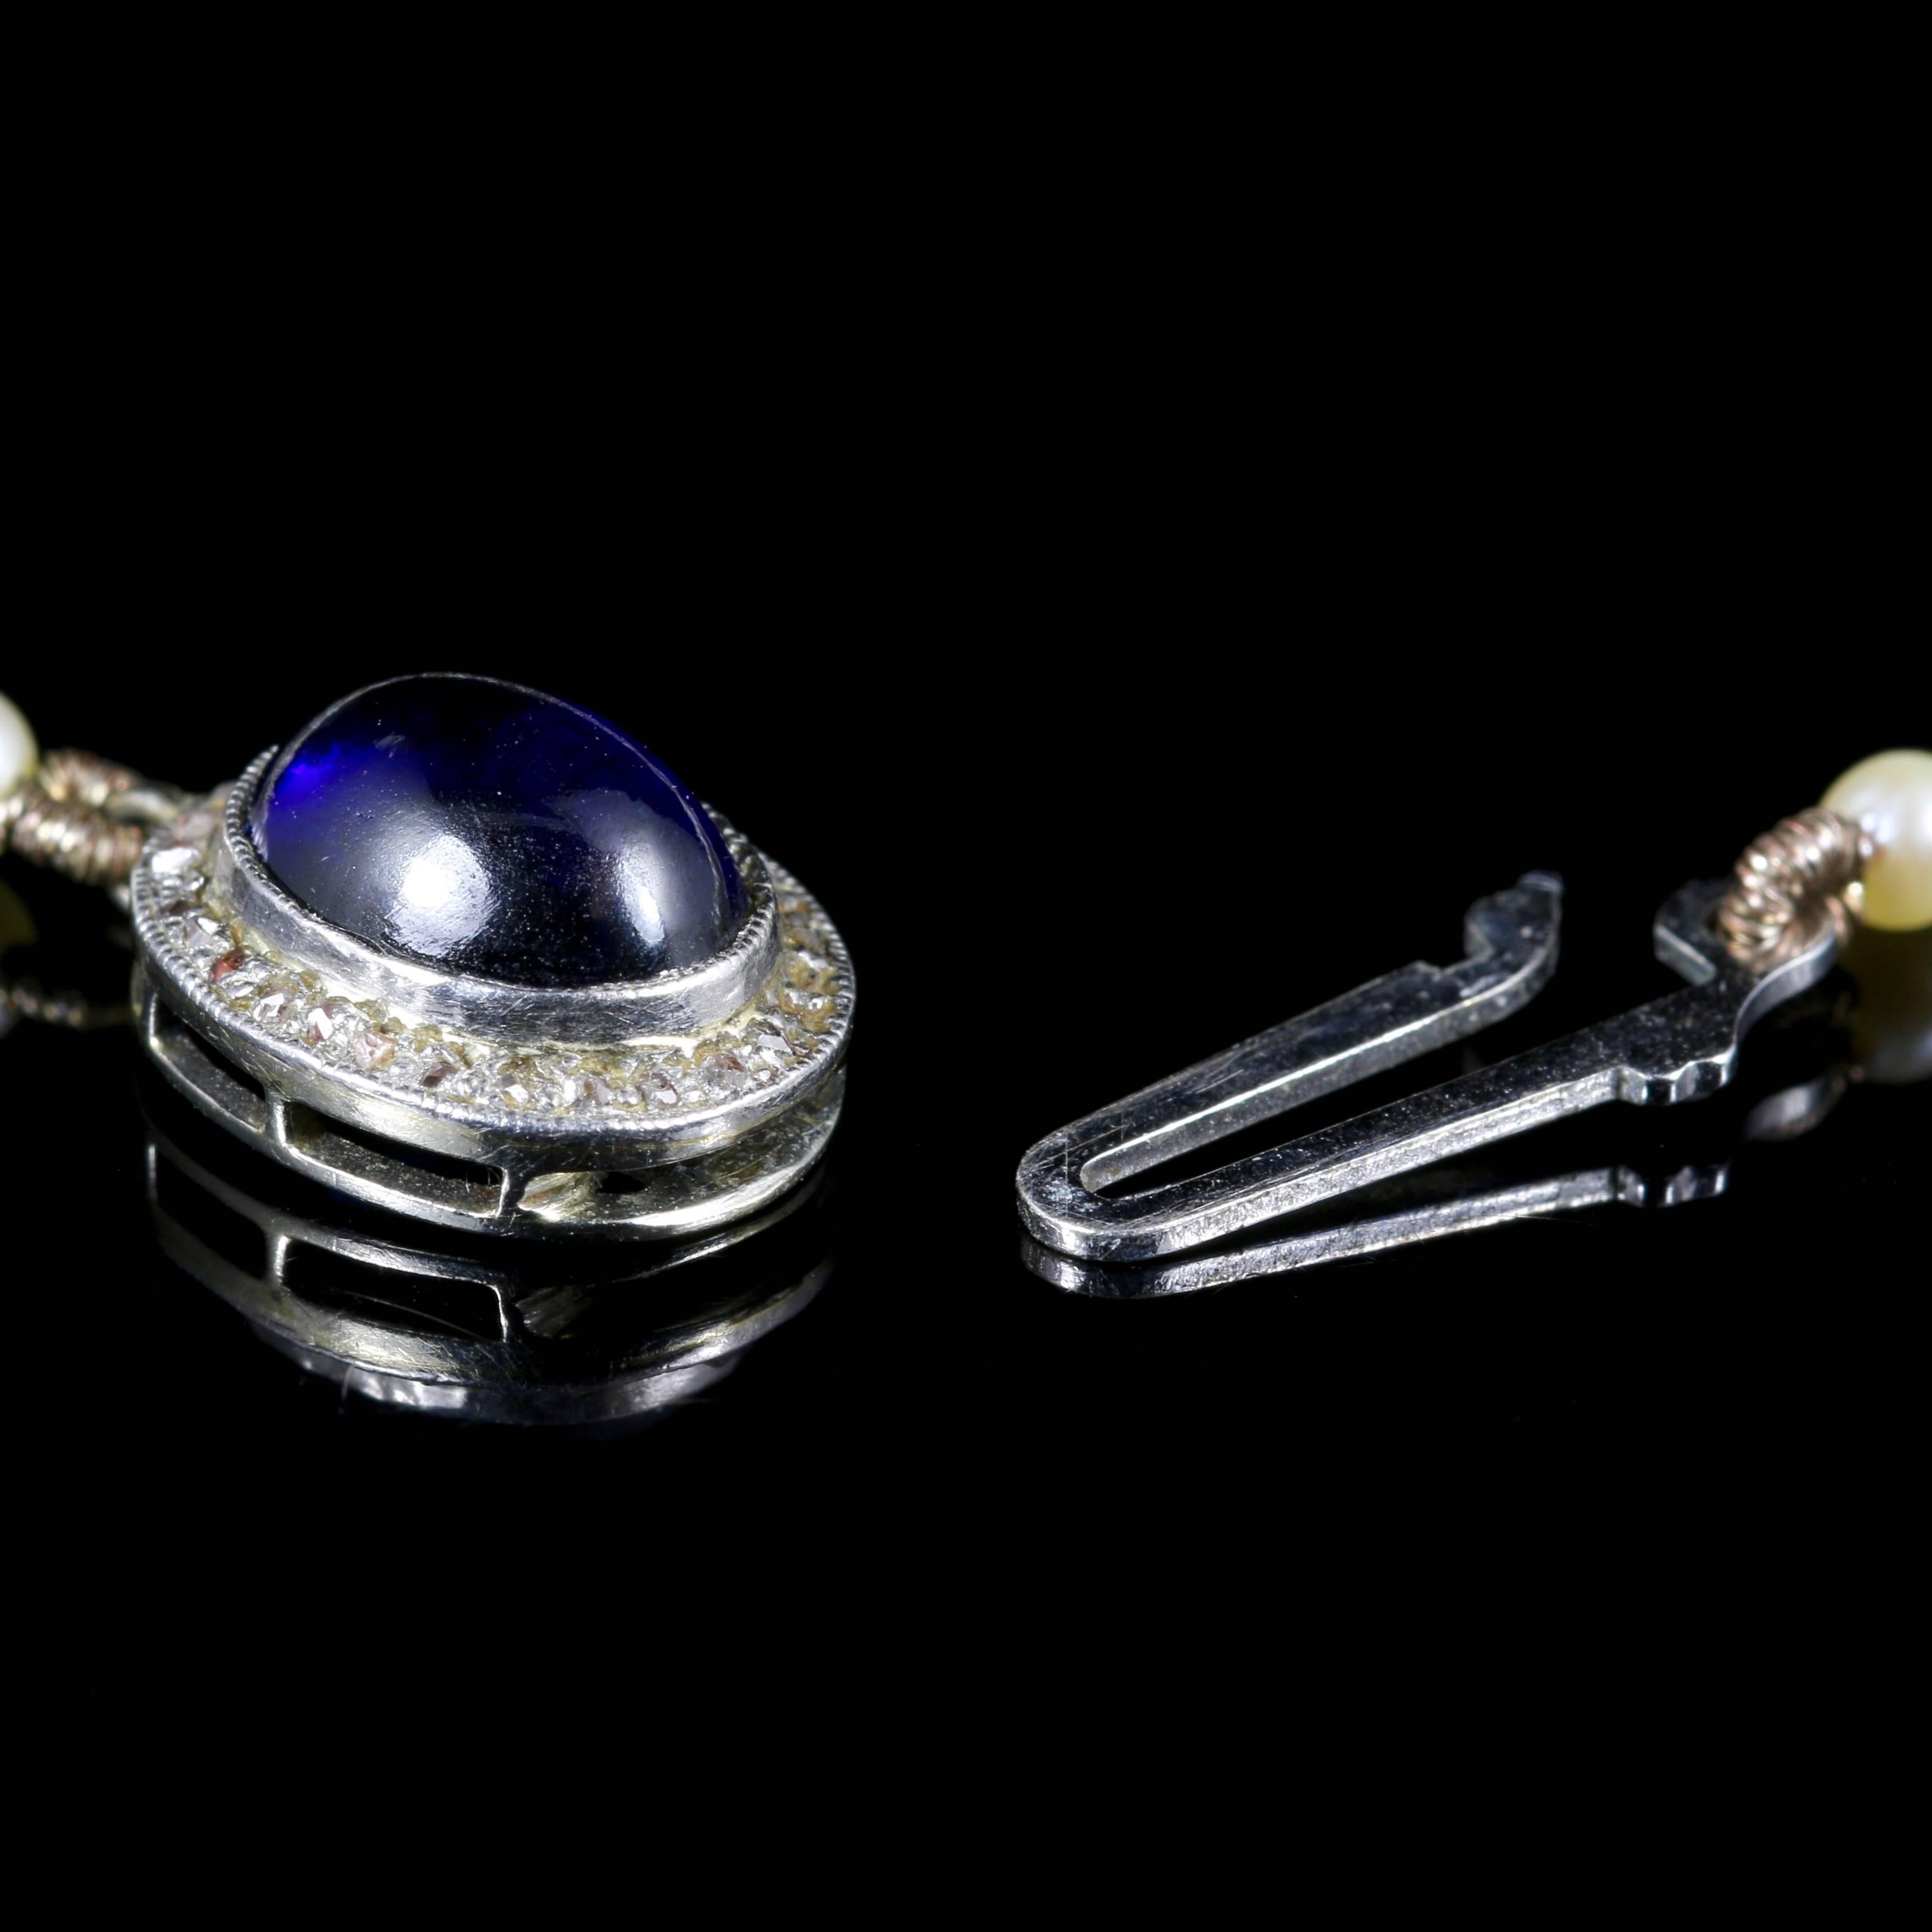 Antique Edwardian Pearl Necklace Sapphire Diamond Clasp in Original Box 1